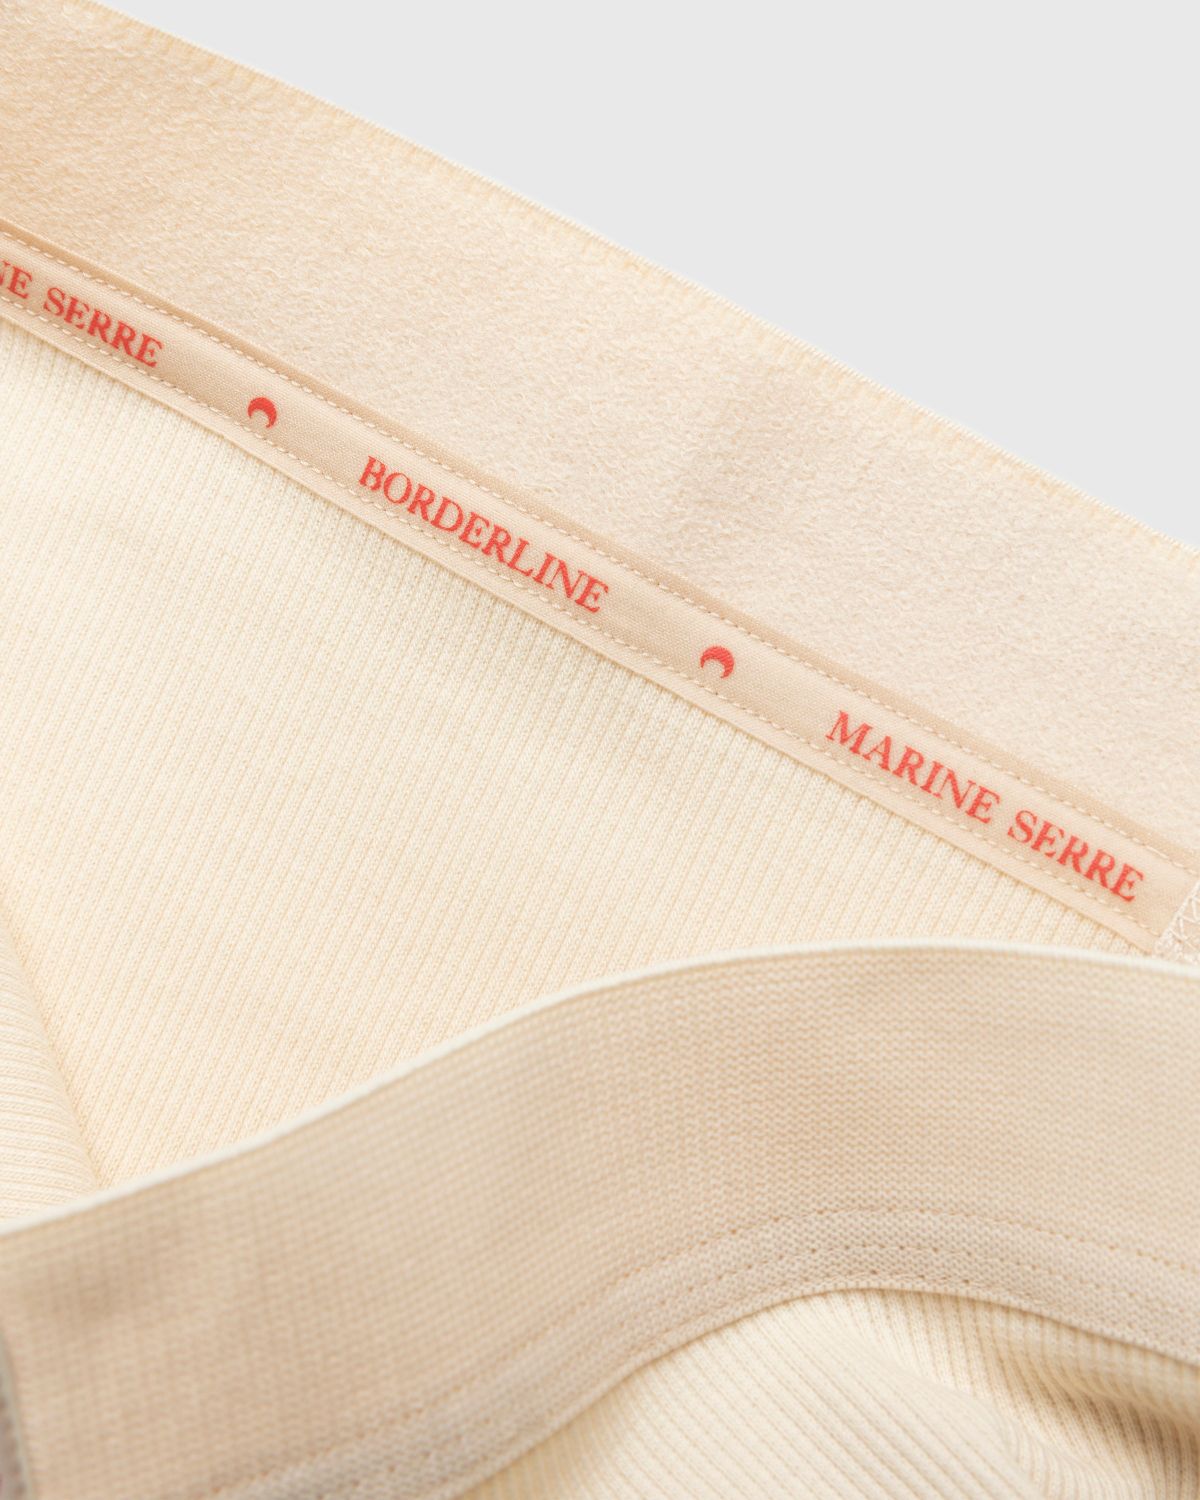 Marine Serre – Organic Cotton Ribbed Boxers Beige - Boxers - Beige - Image 3